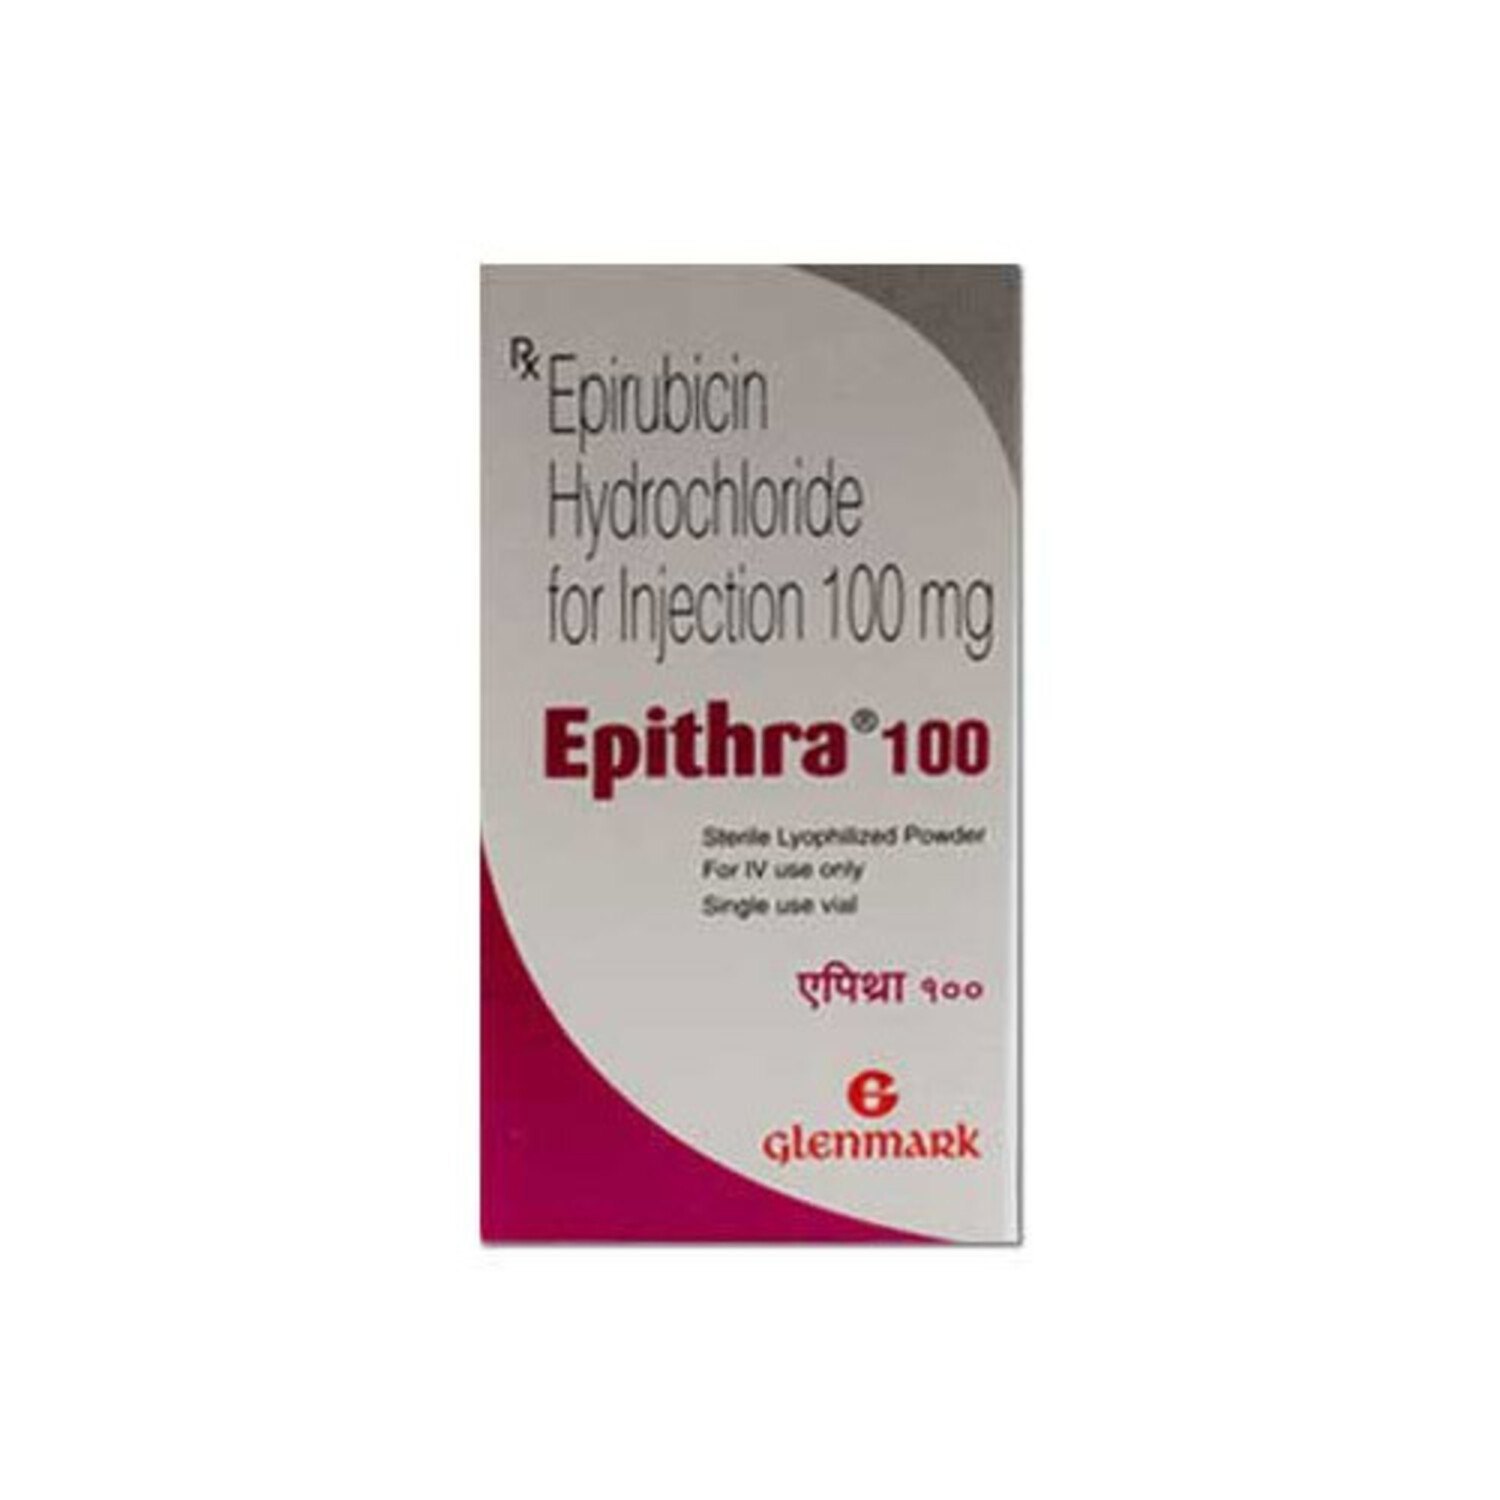 epithra-100-mg-injection